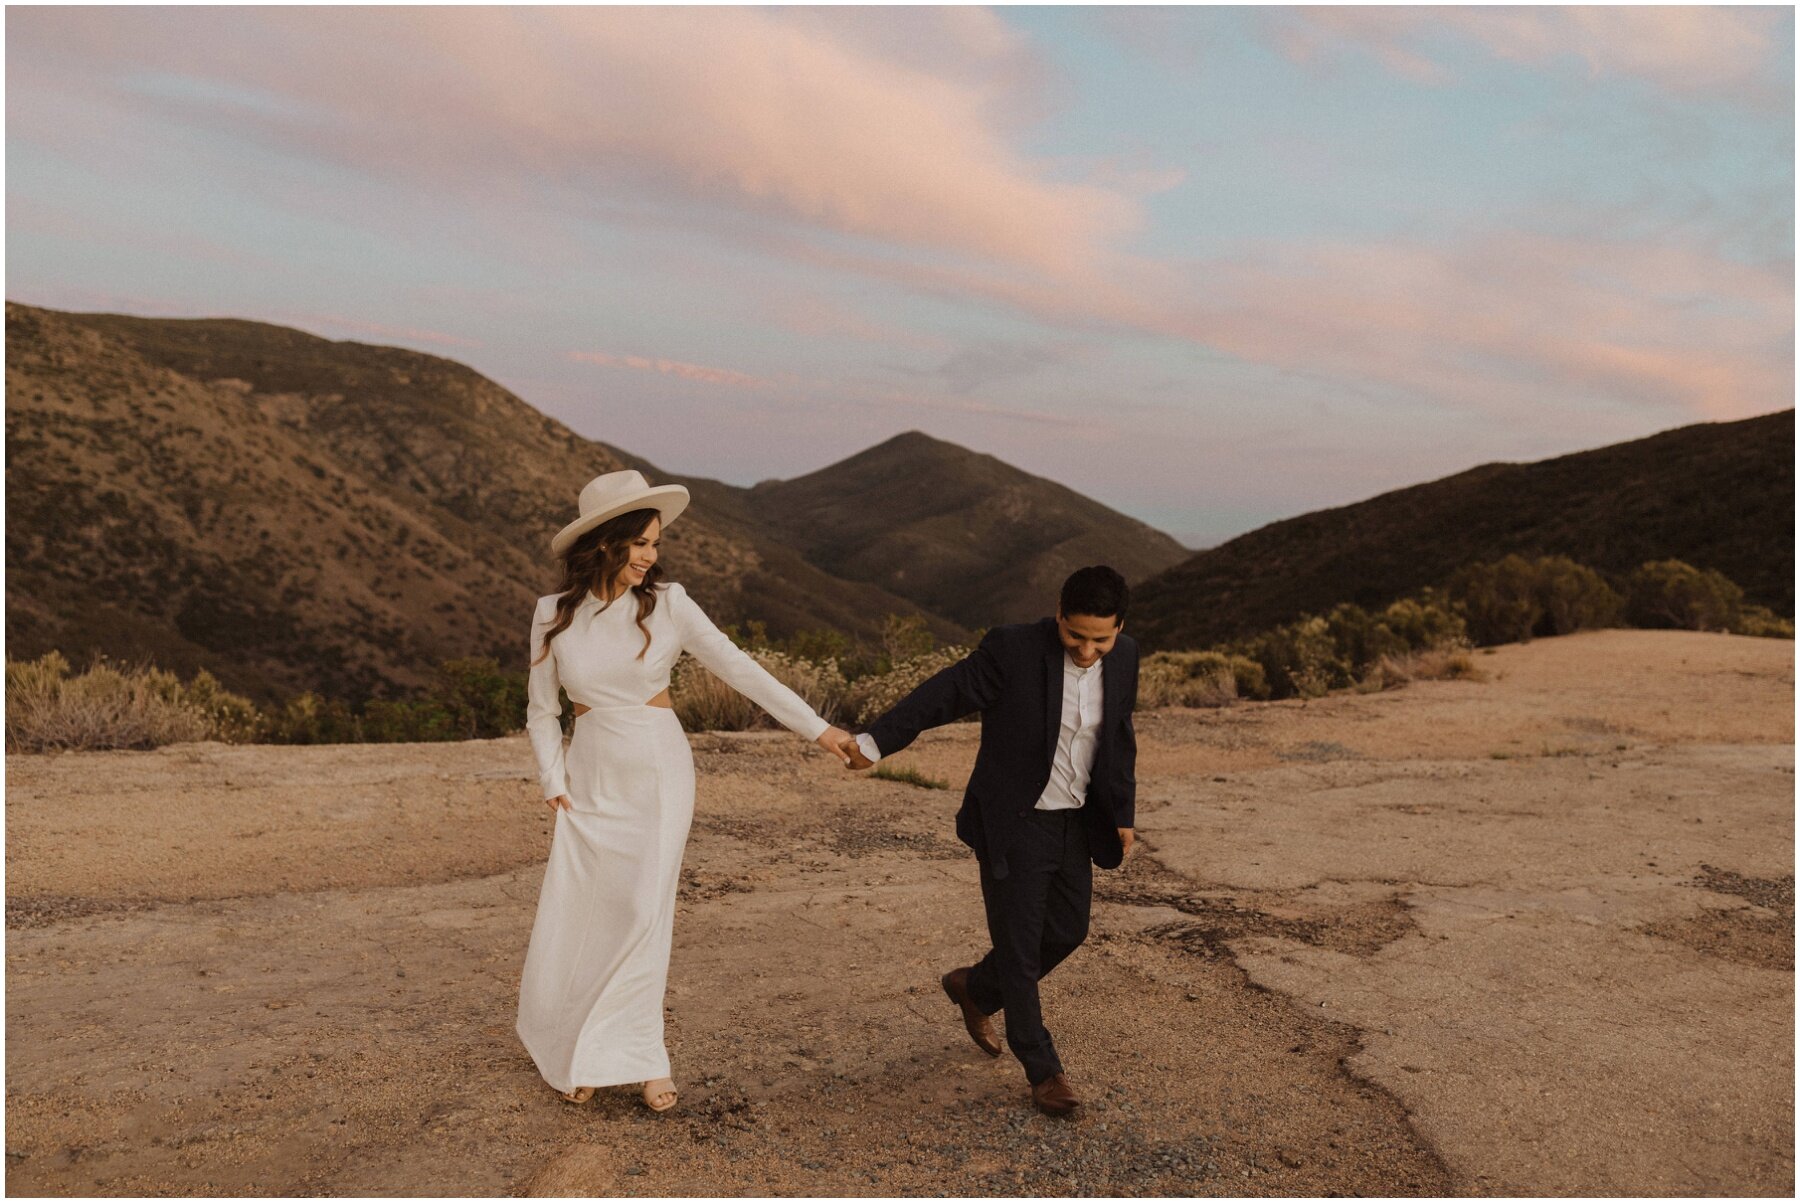 desert engagement session in california - erika greene photography - couples photographer_0022.jpg